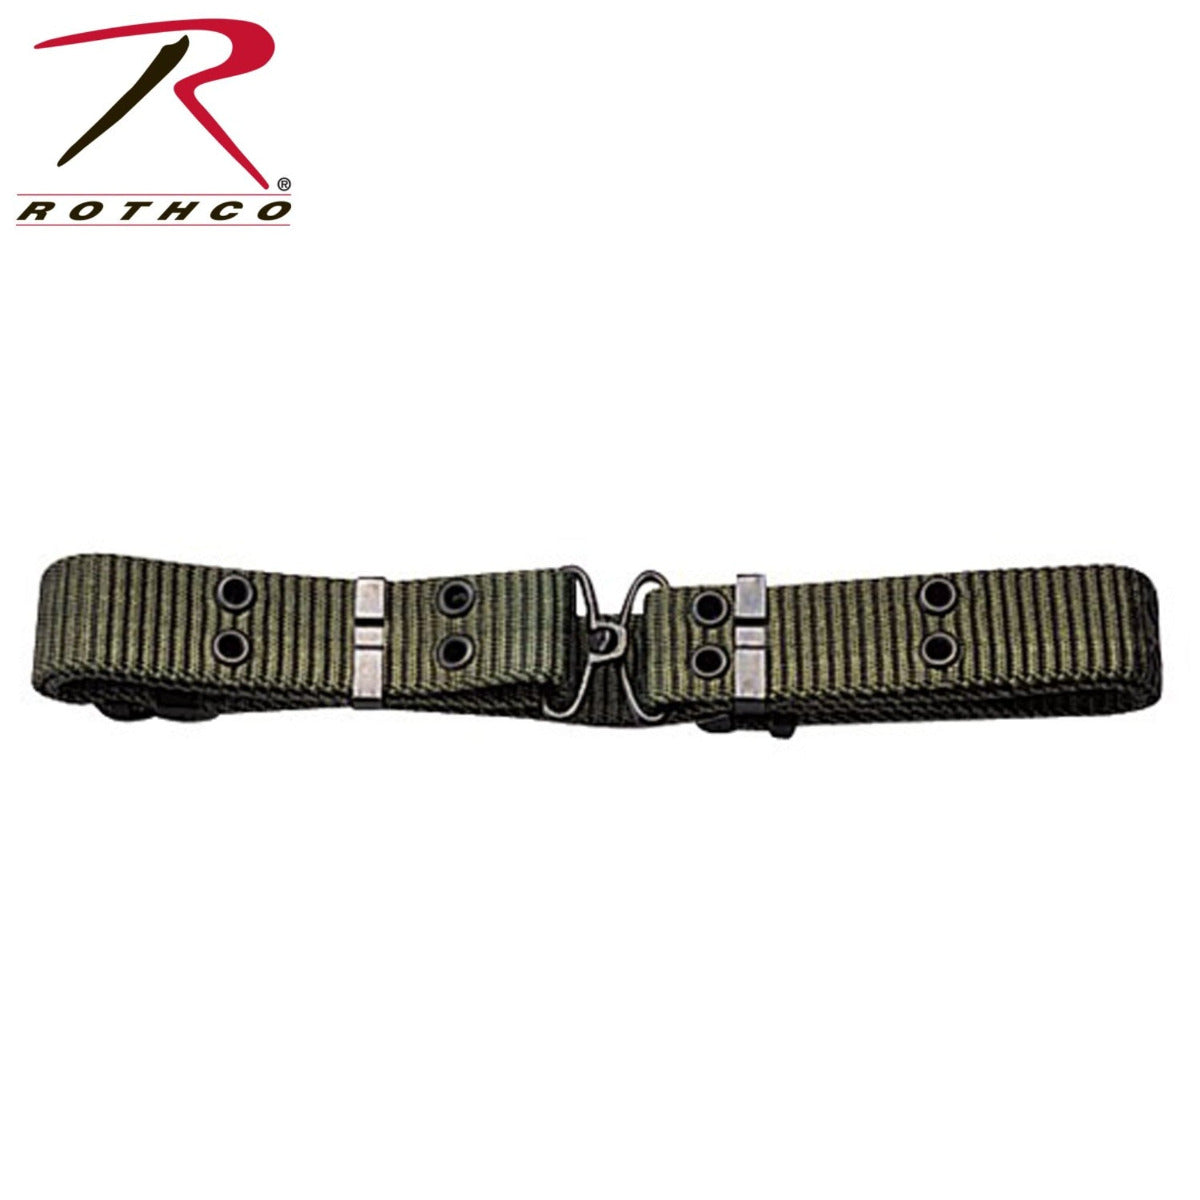 Image of Rothco's Mini-Pistol-Belt in olive drab.